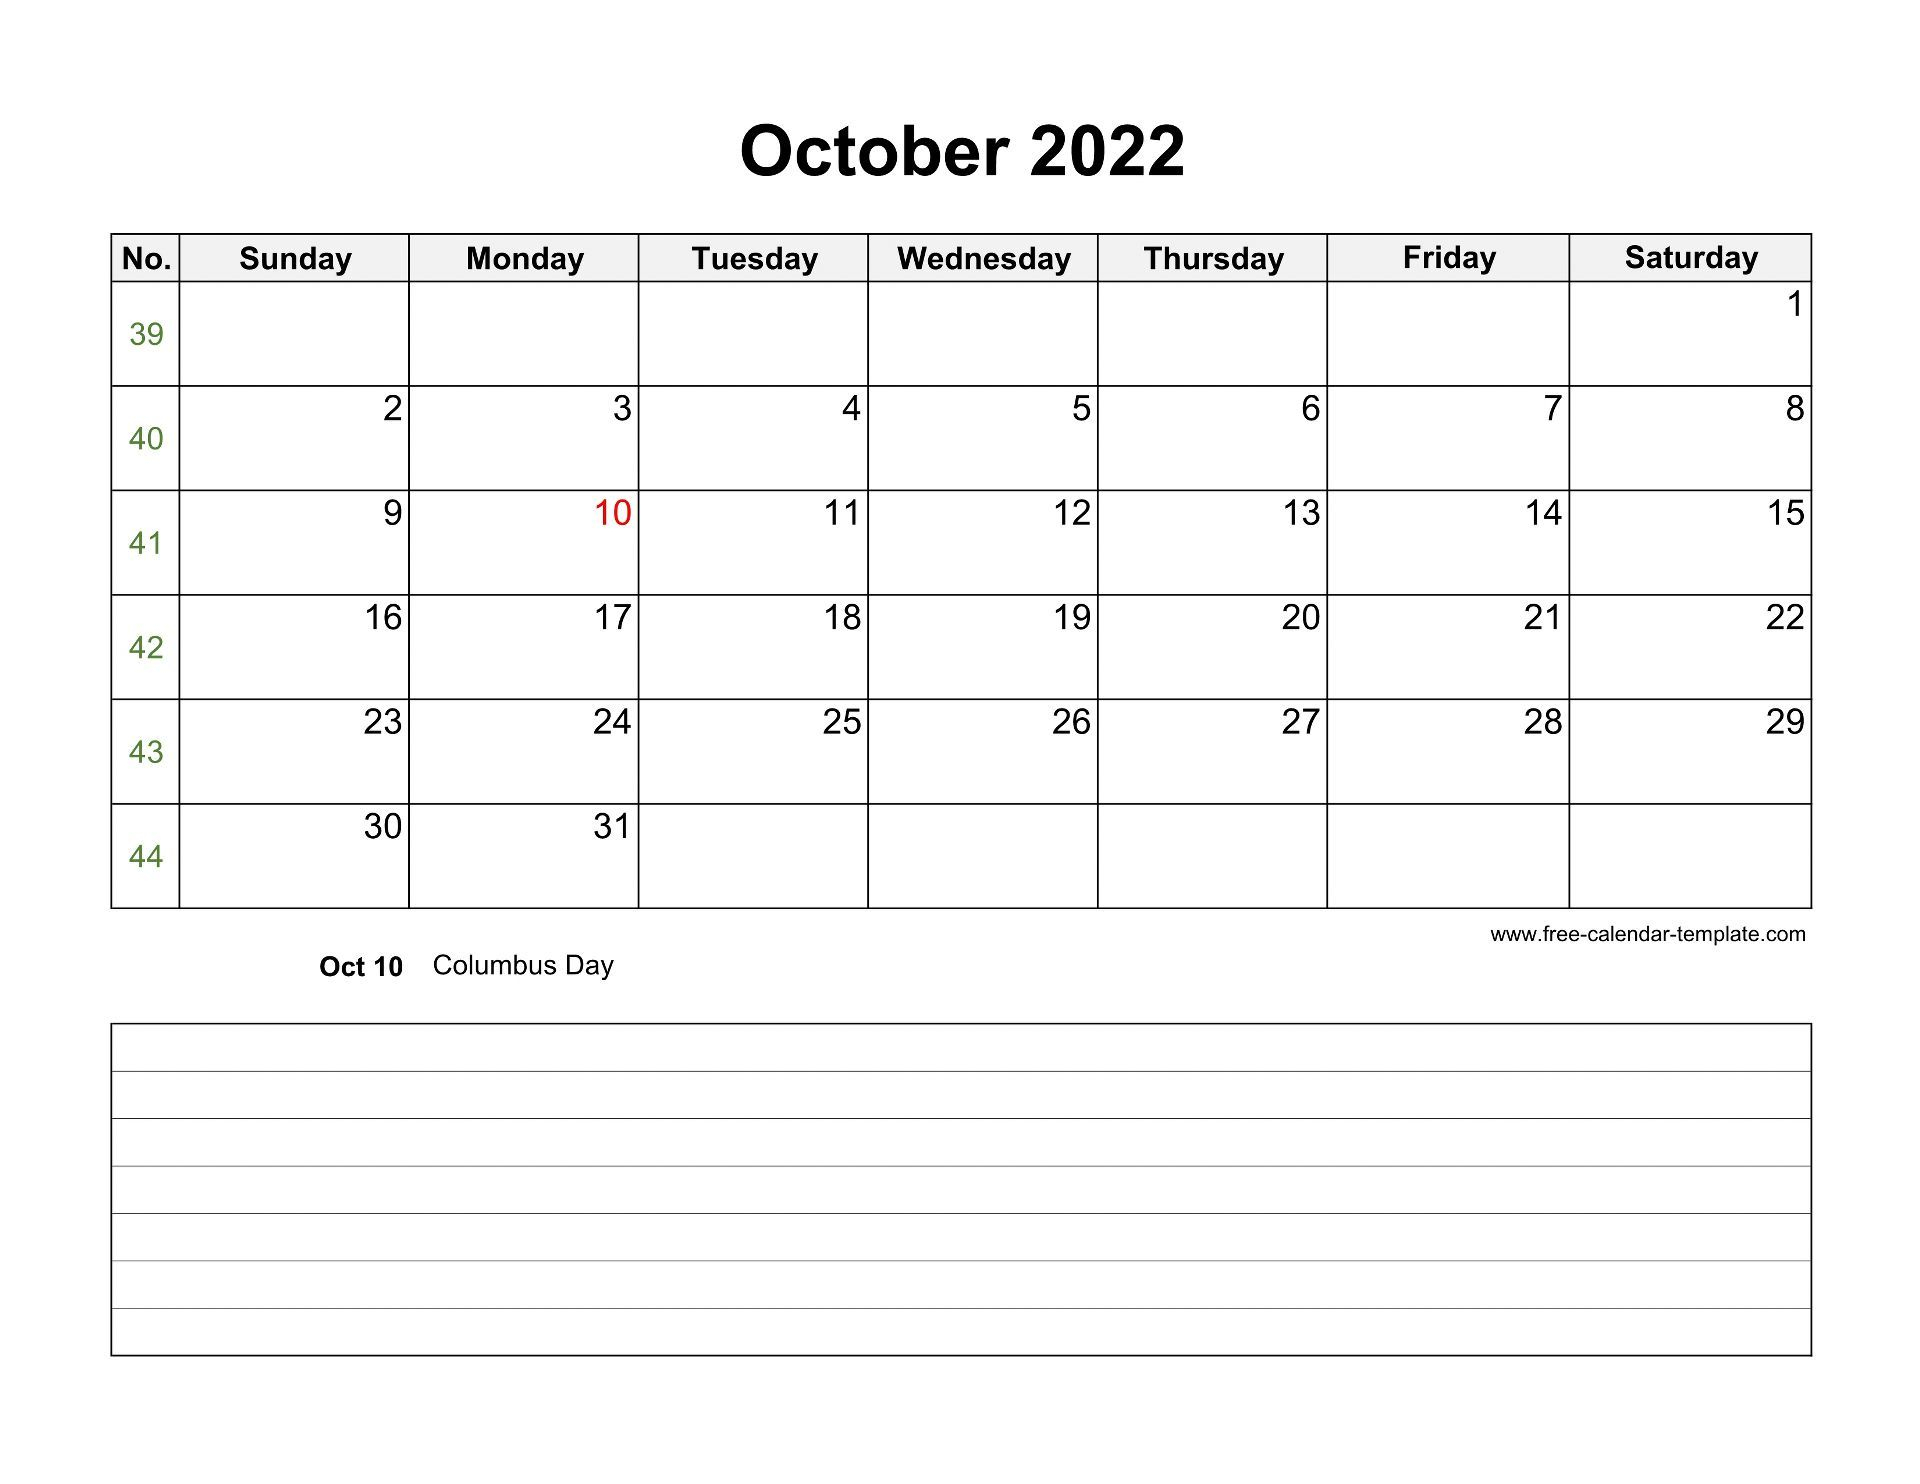 October 2022 Free Calendar Tempplate | Free-Calendar